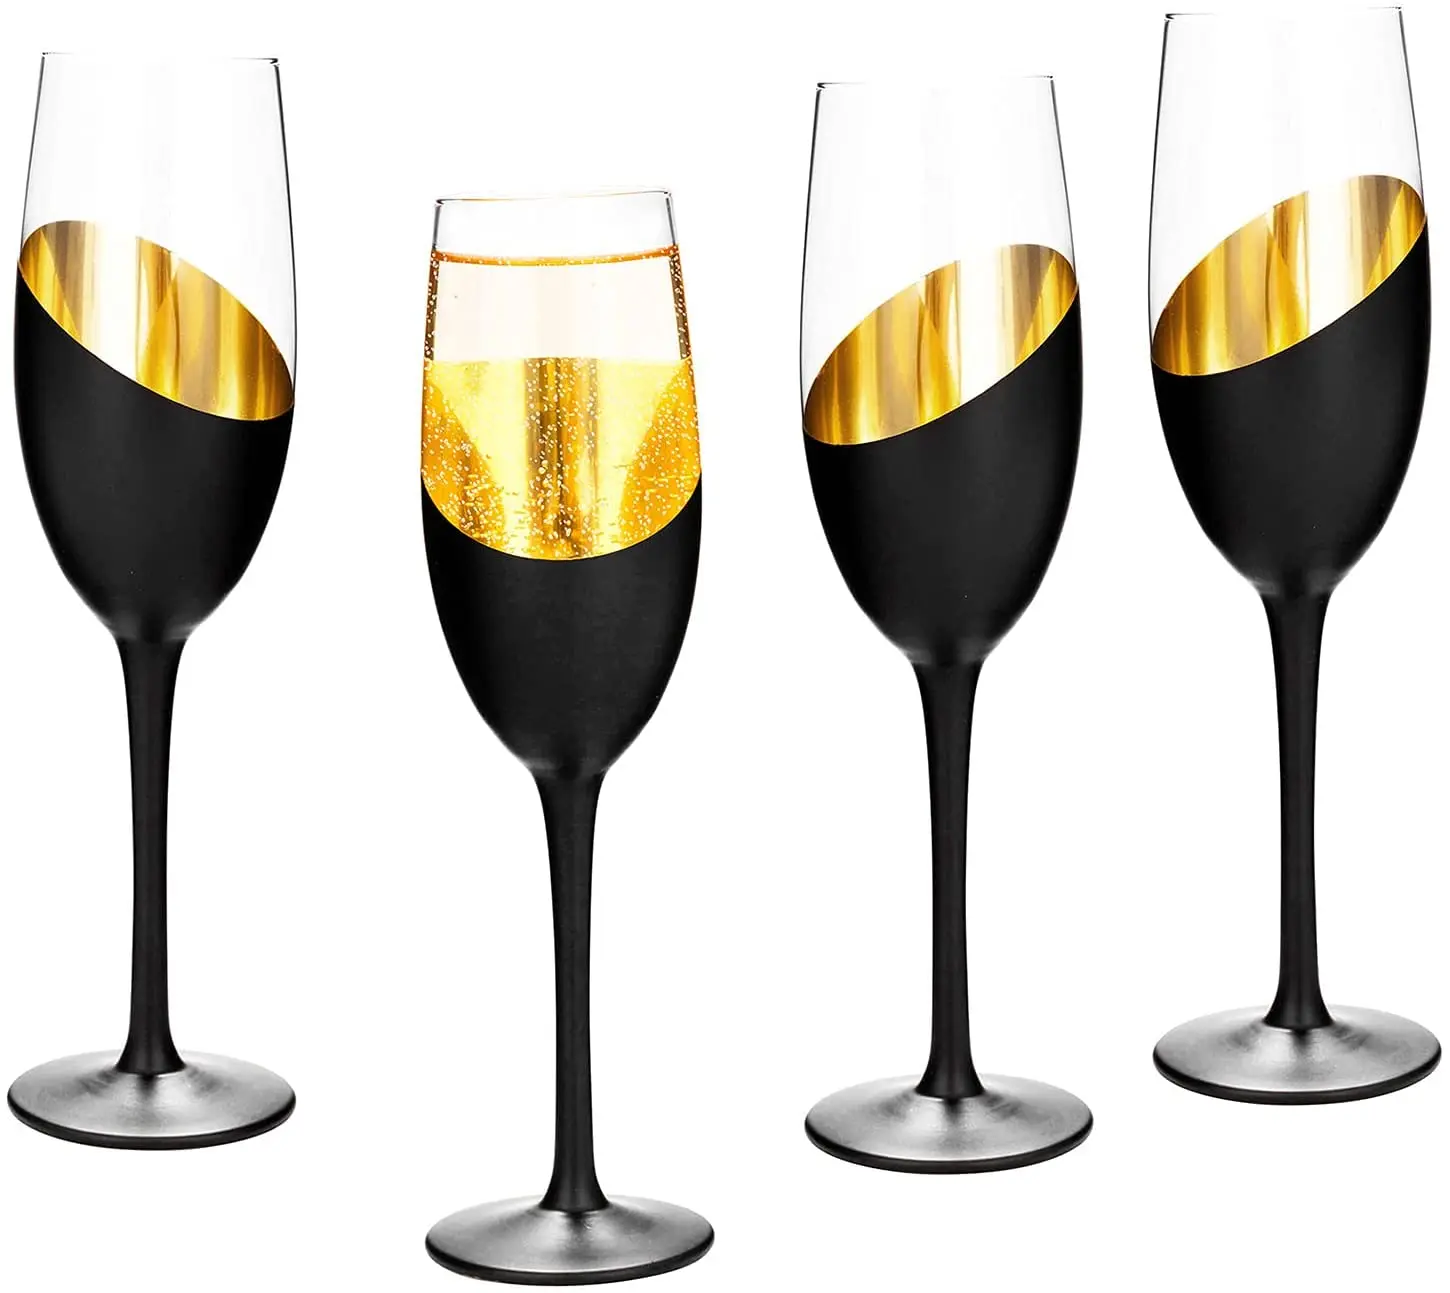 Stemmed Champagne Flute Glasses with Matte Black and Gold Plated Design, 8 oz, Set of 6